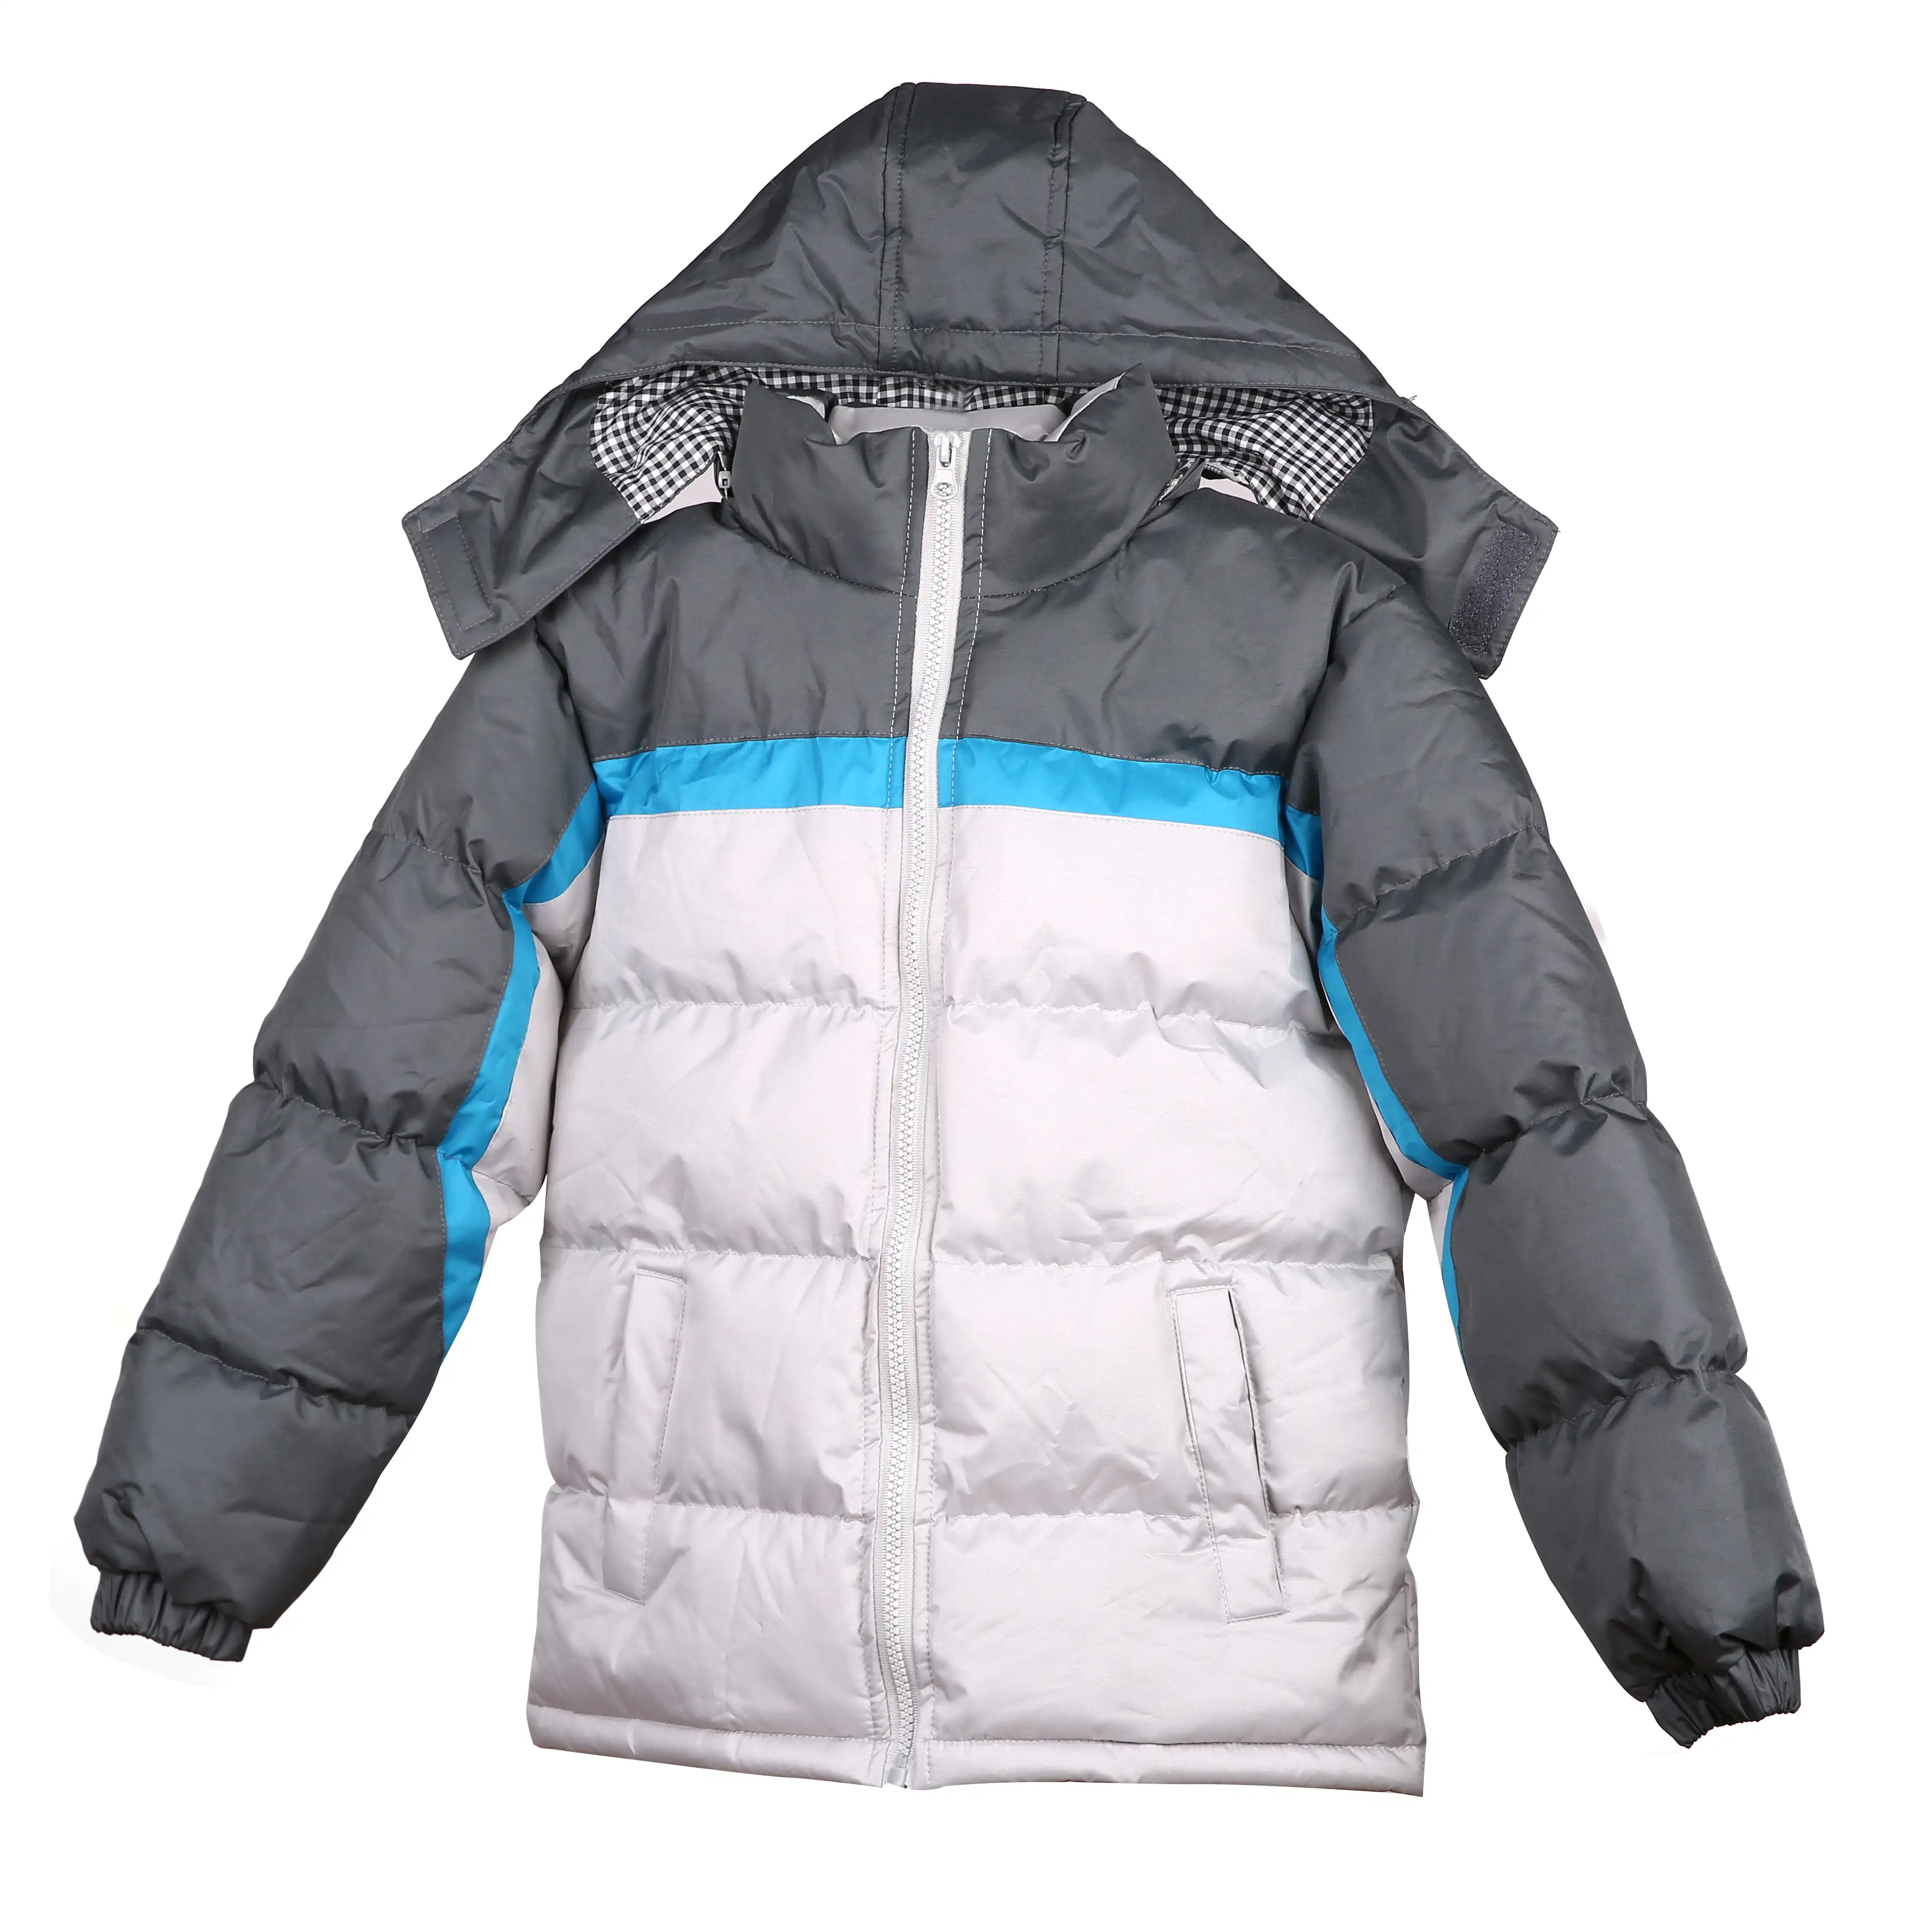 सस्ते चीन थोक वस्त्र बच्चों को सर्दियों जैकेट overstock परिसमापन